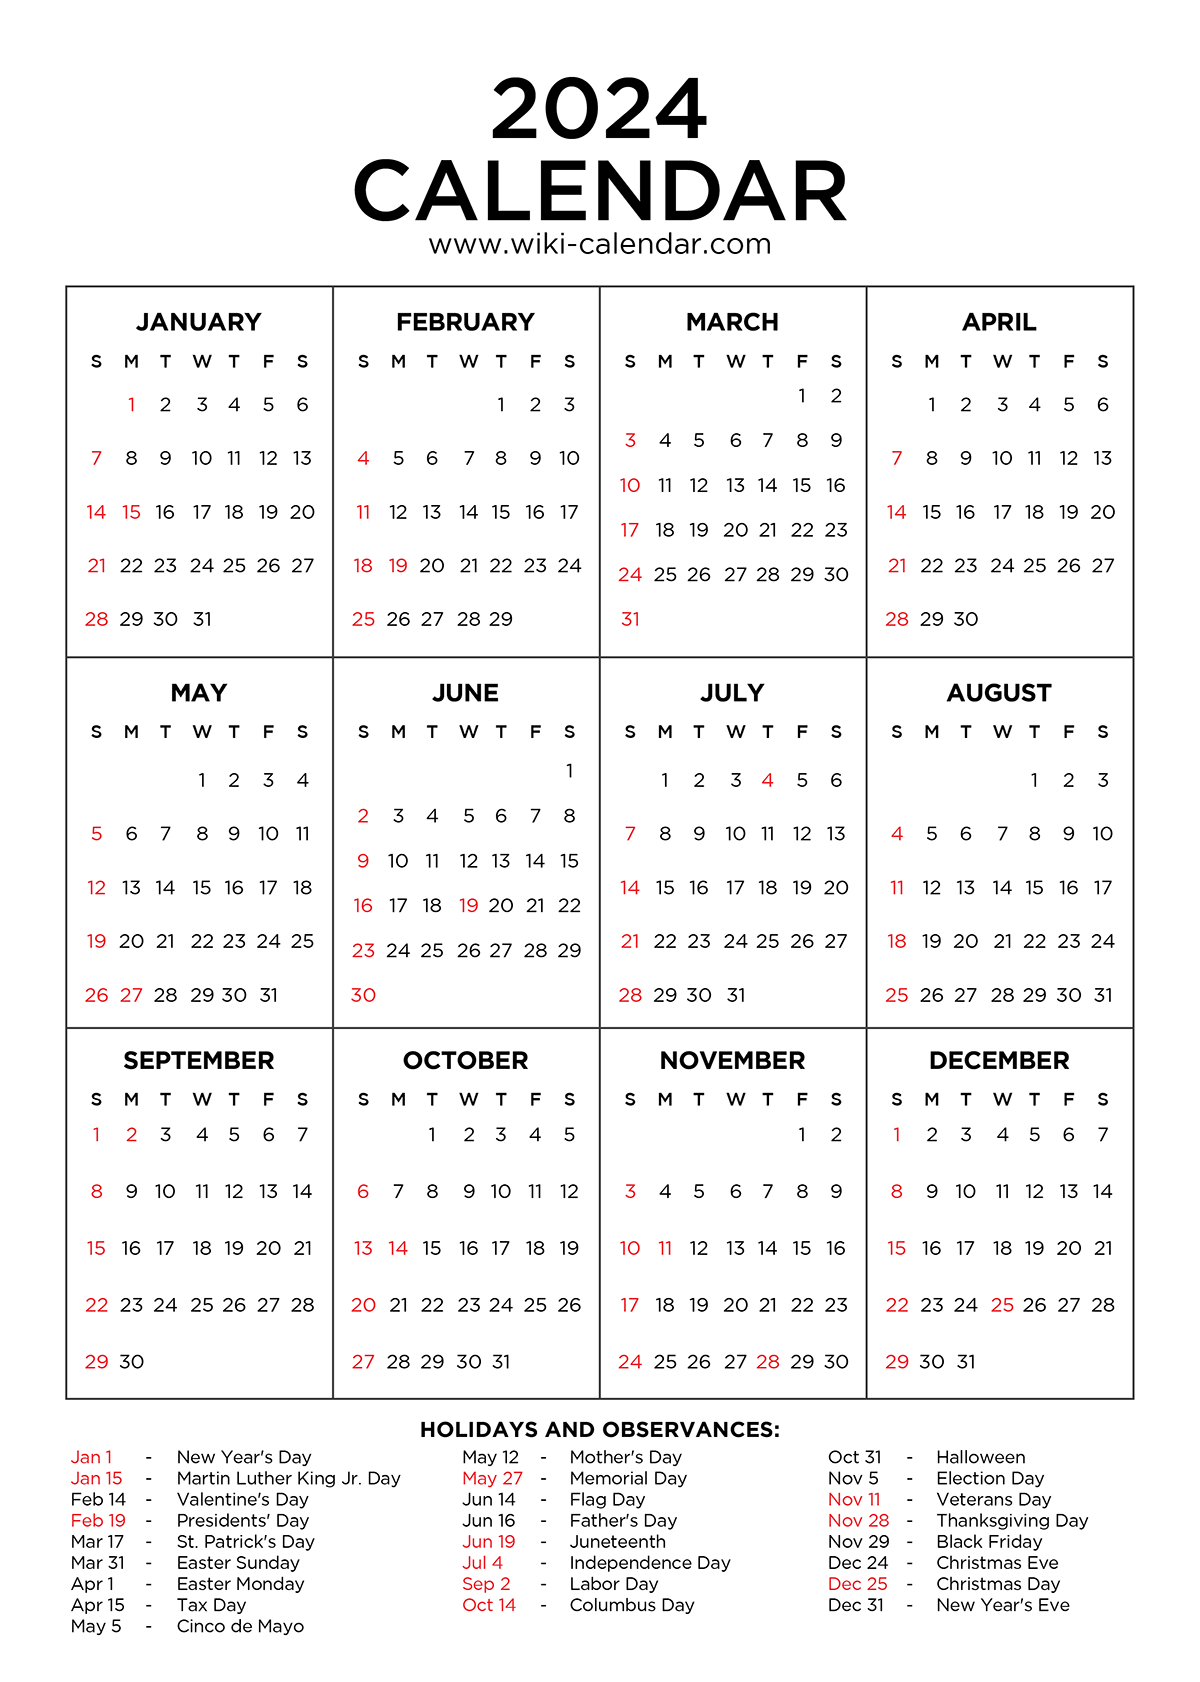 Year 2024 Calendar Printable With Holidays - Wiki Calendar | Printable Calendar 2024 With Holidays Uk